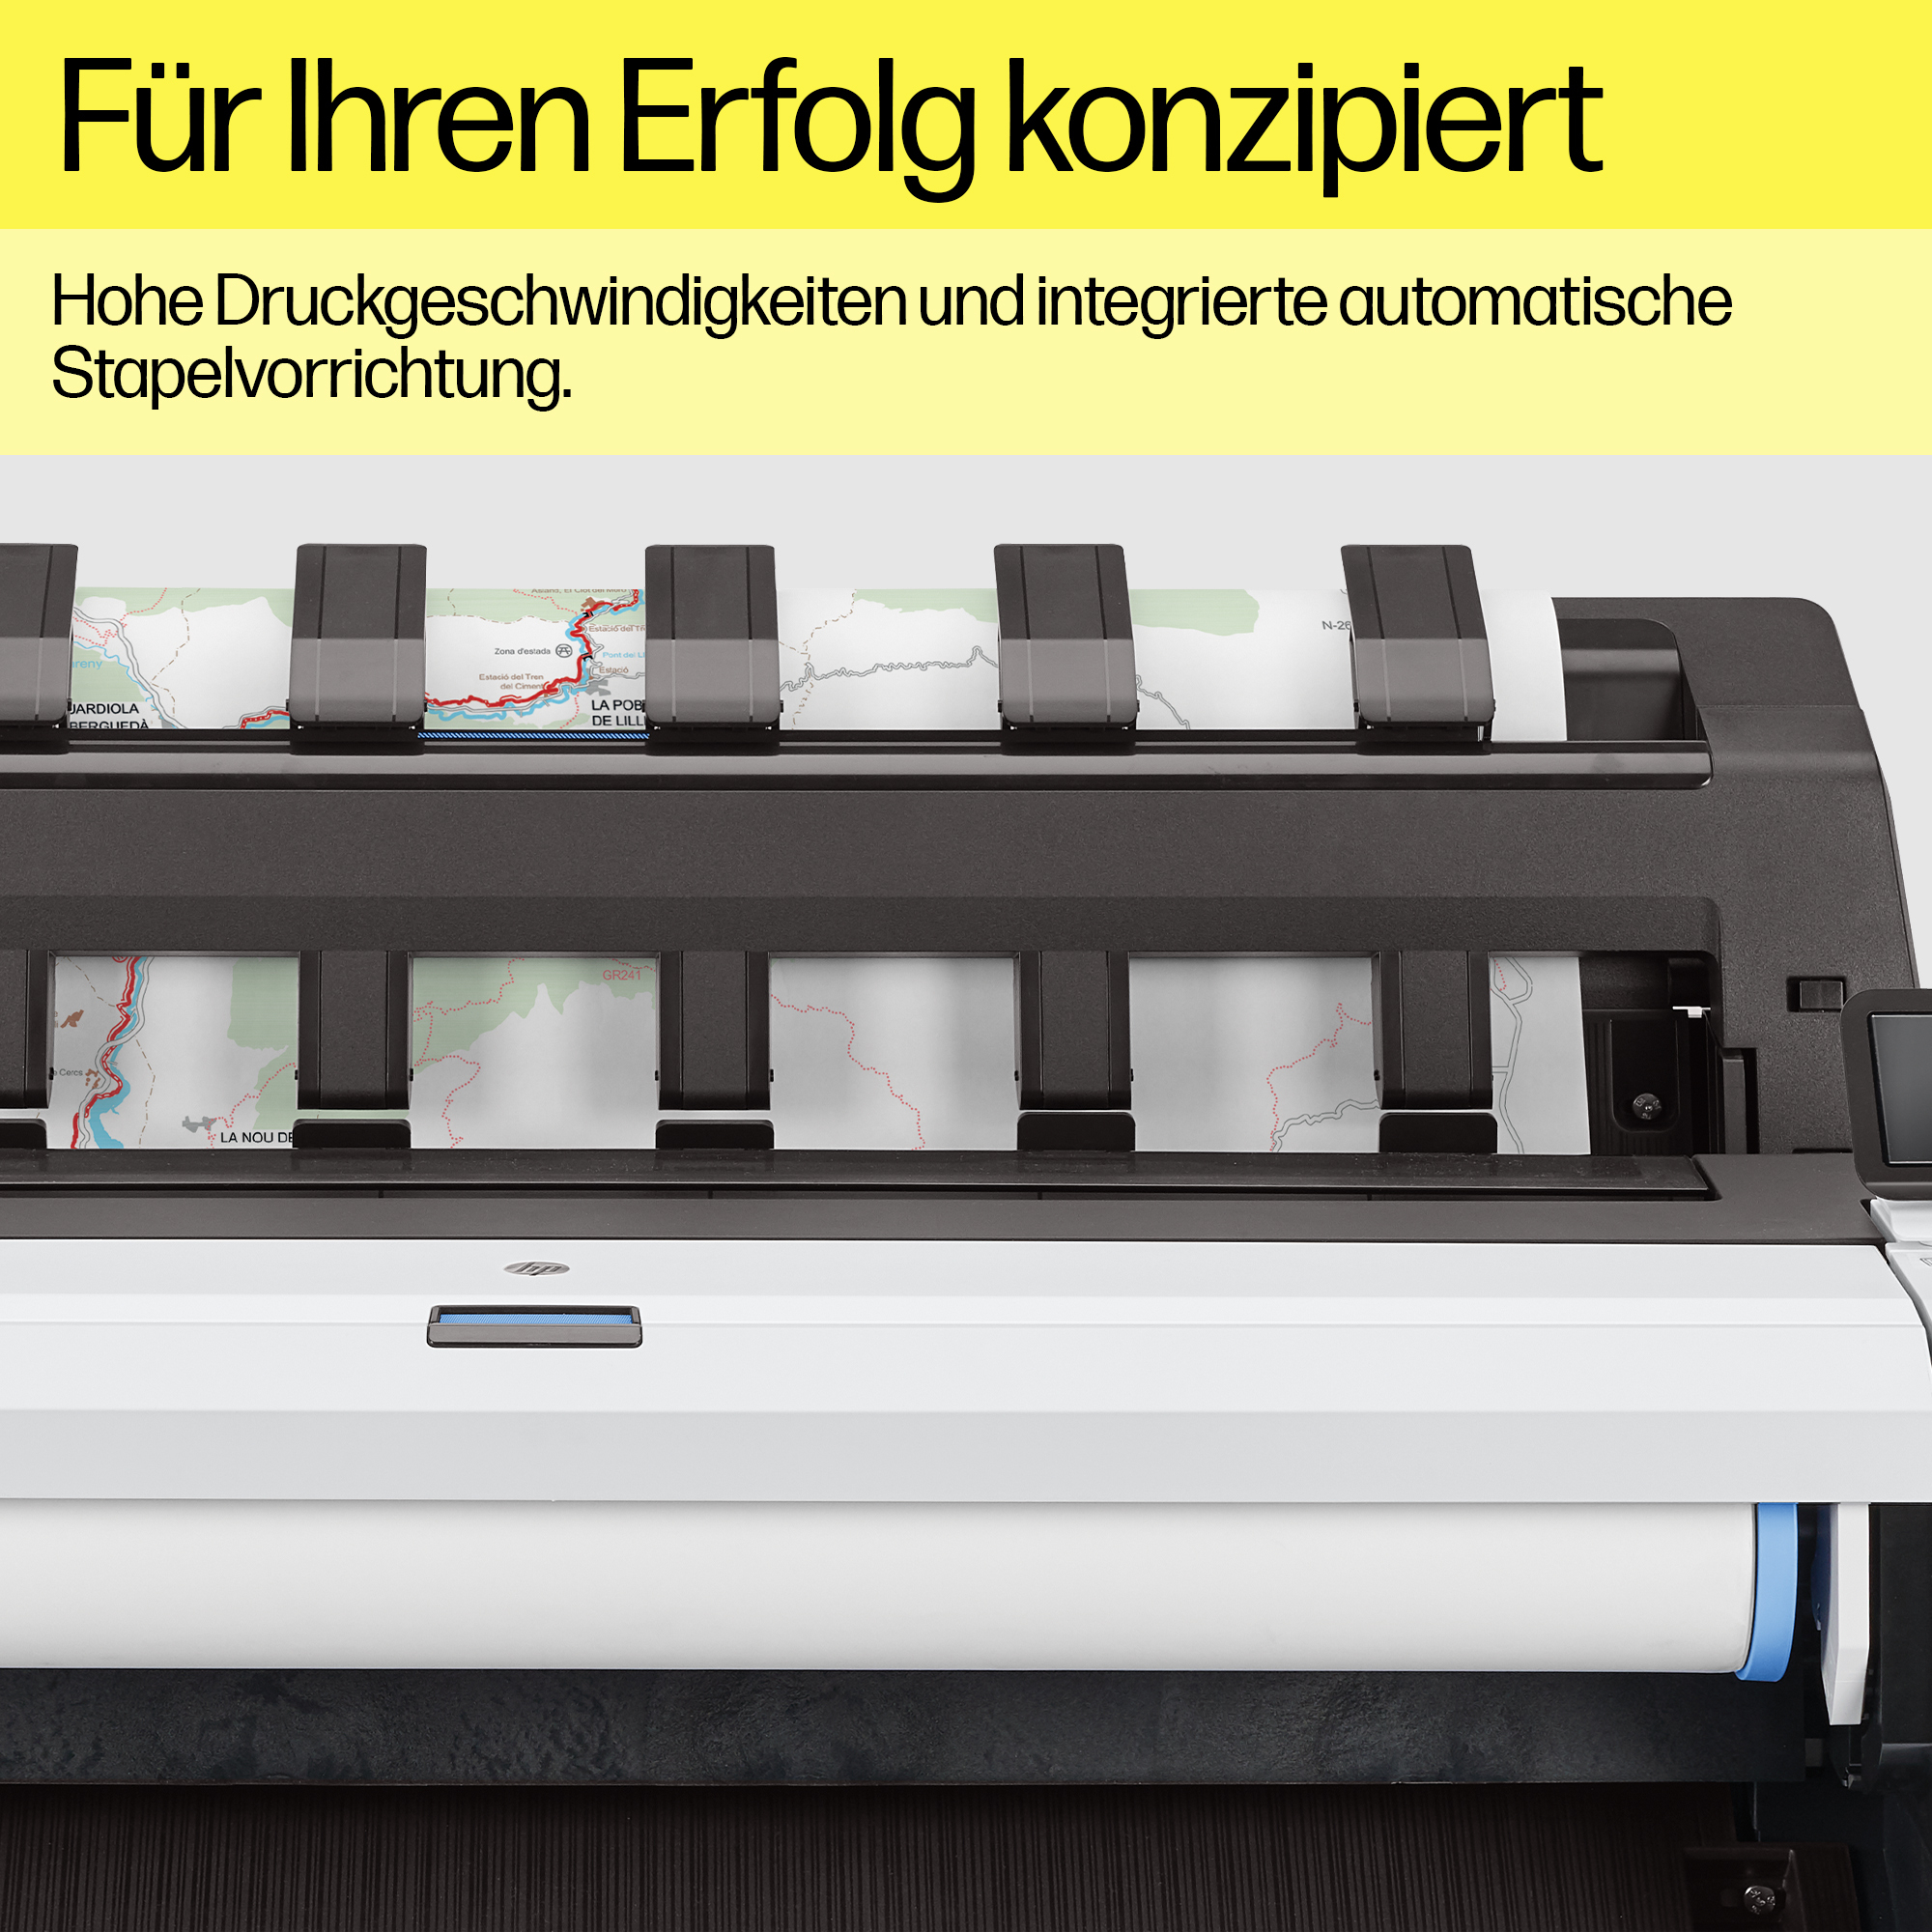 HP DesignJet T1600 36-in Printer